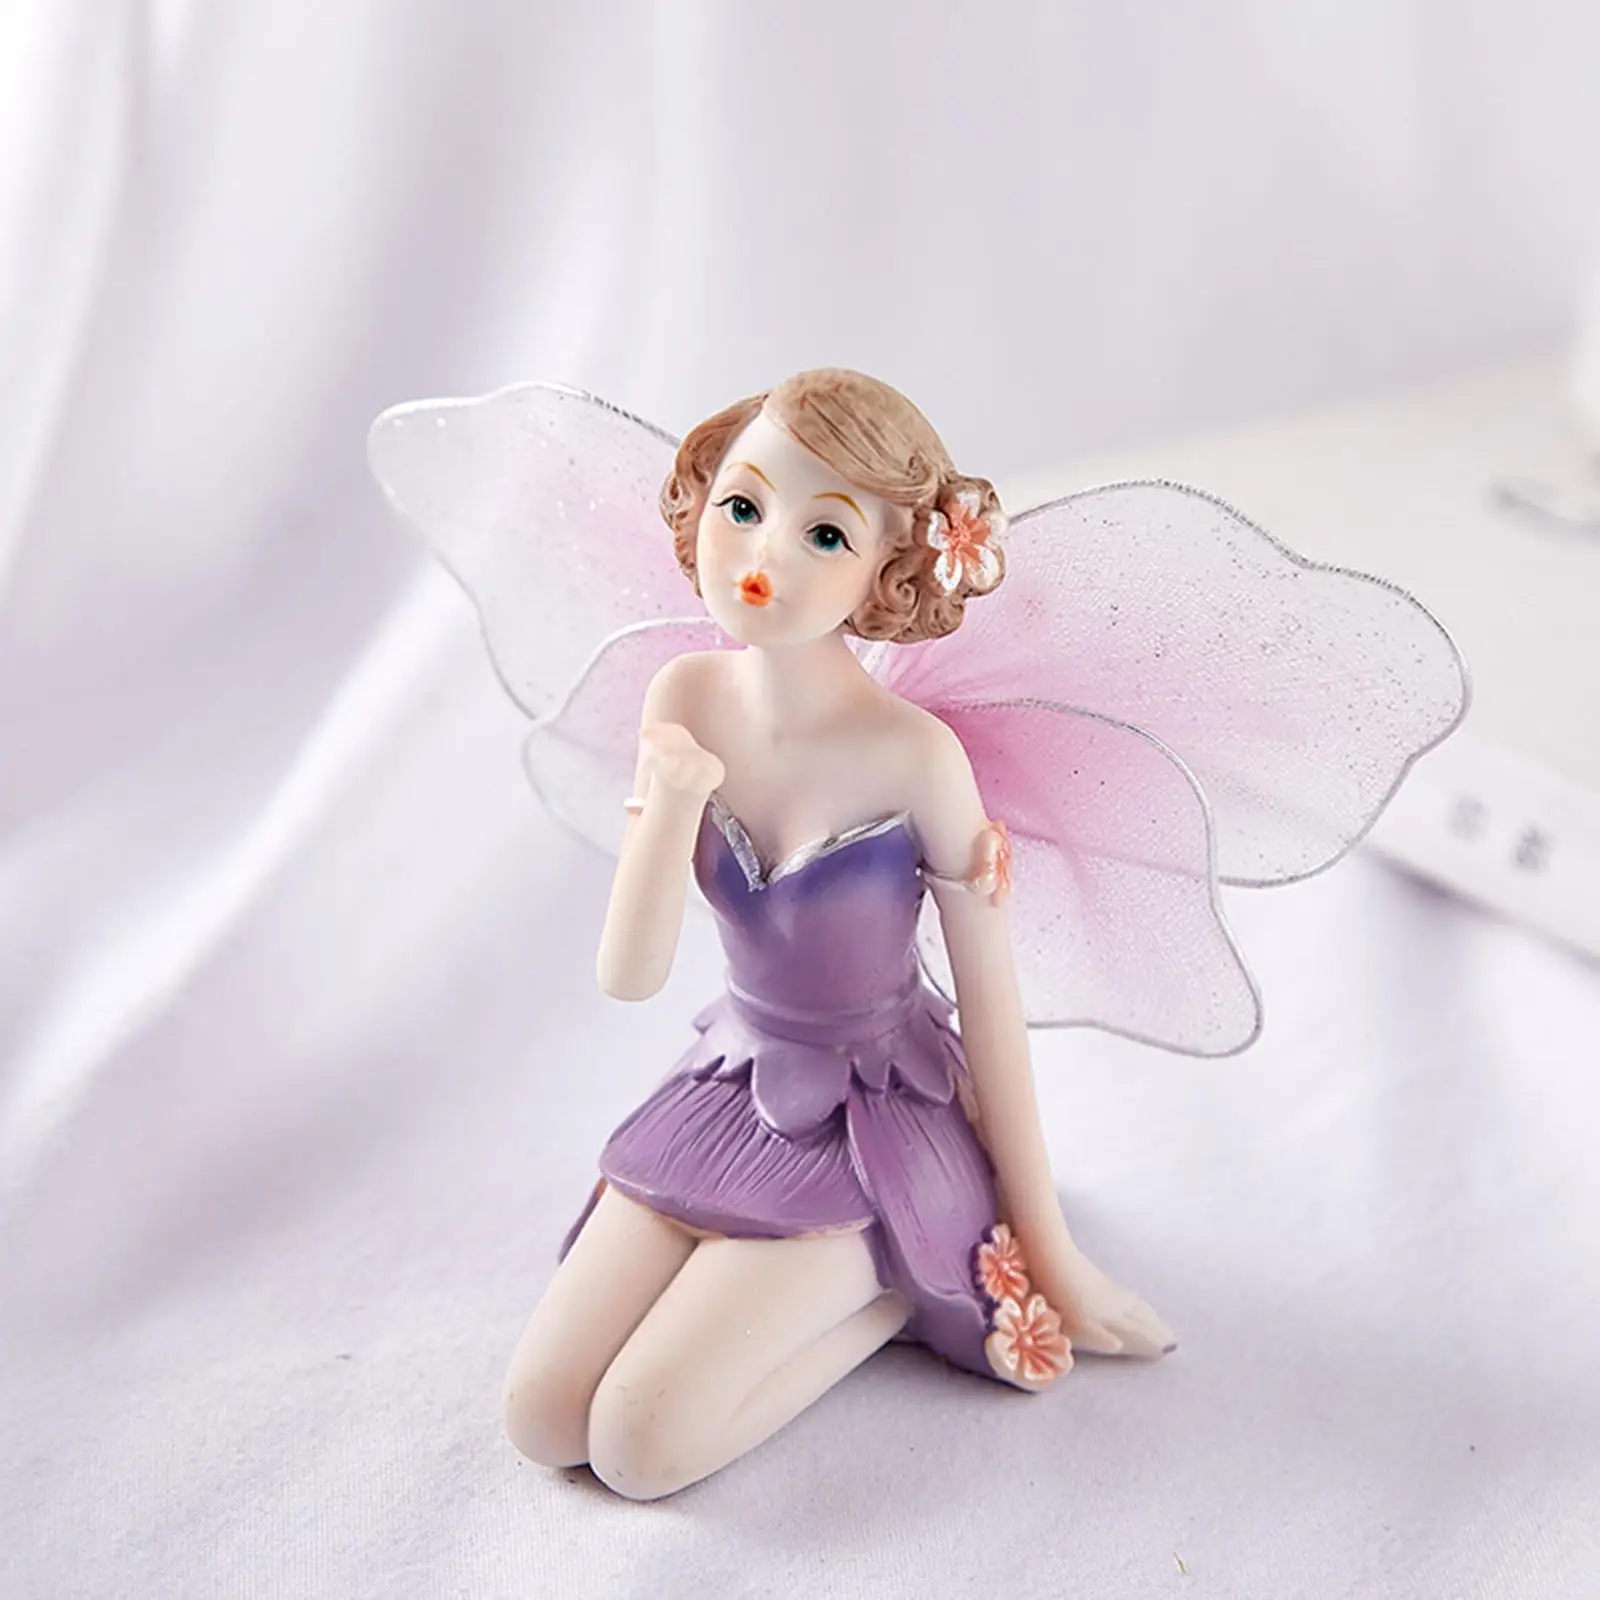 Miniature Flower Fairy Statue Handmade Small Creative Elf Girls Decorative Resin Ornaments for Home Decor Living Room Tabletop